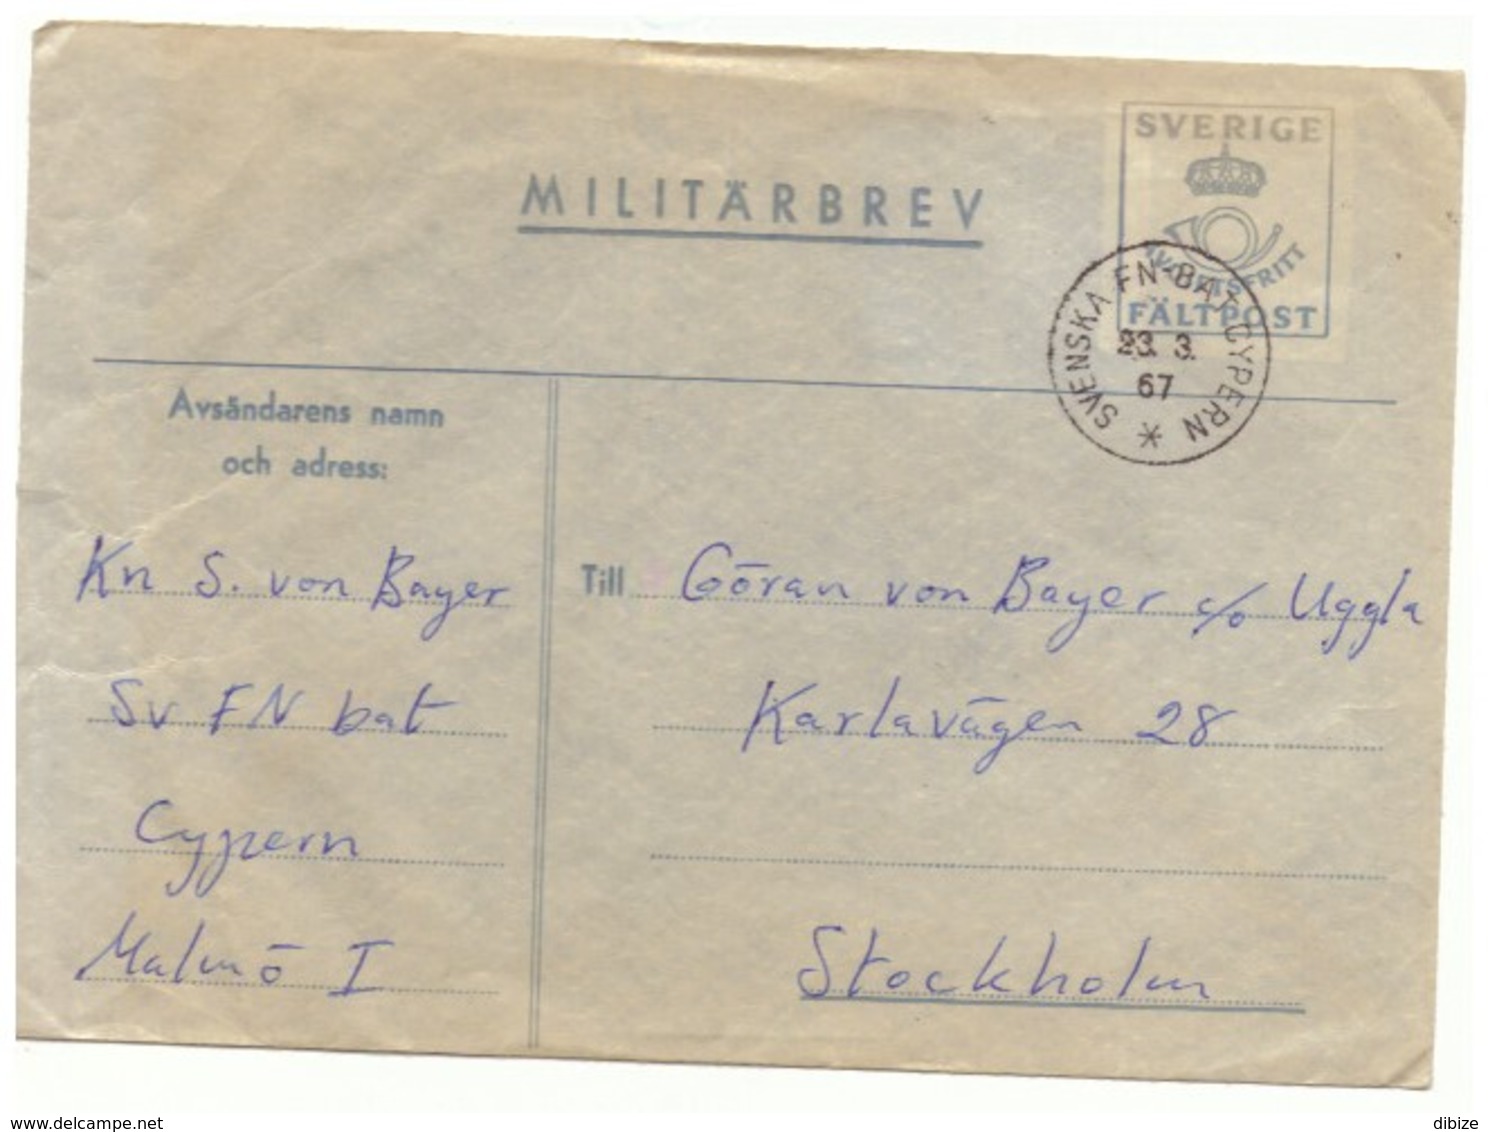 Enveloppe En Franchise Militaire. Suède. Miltärbrev. Avgiftsfritt.  Fältpost. Sverige. 1962. - Militärmarken